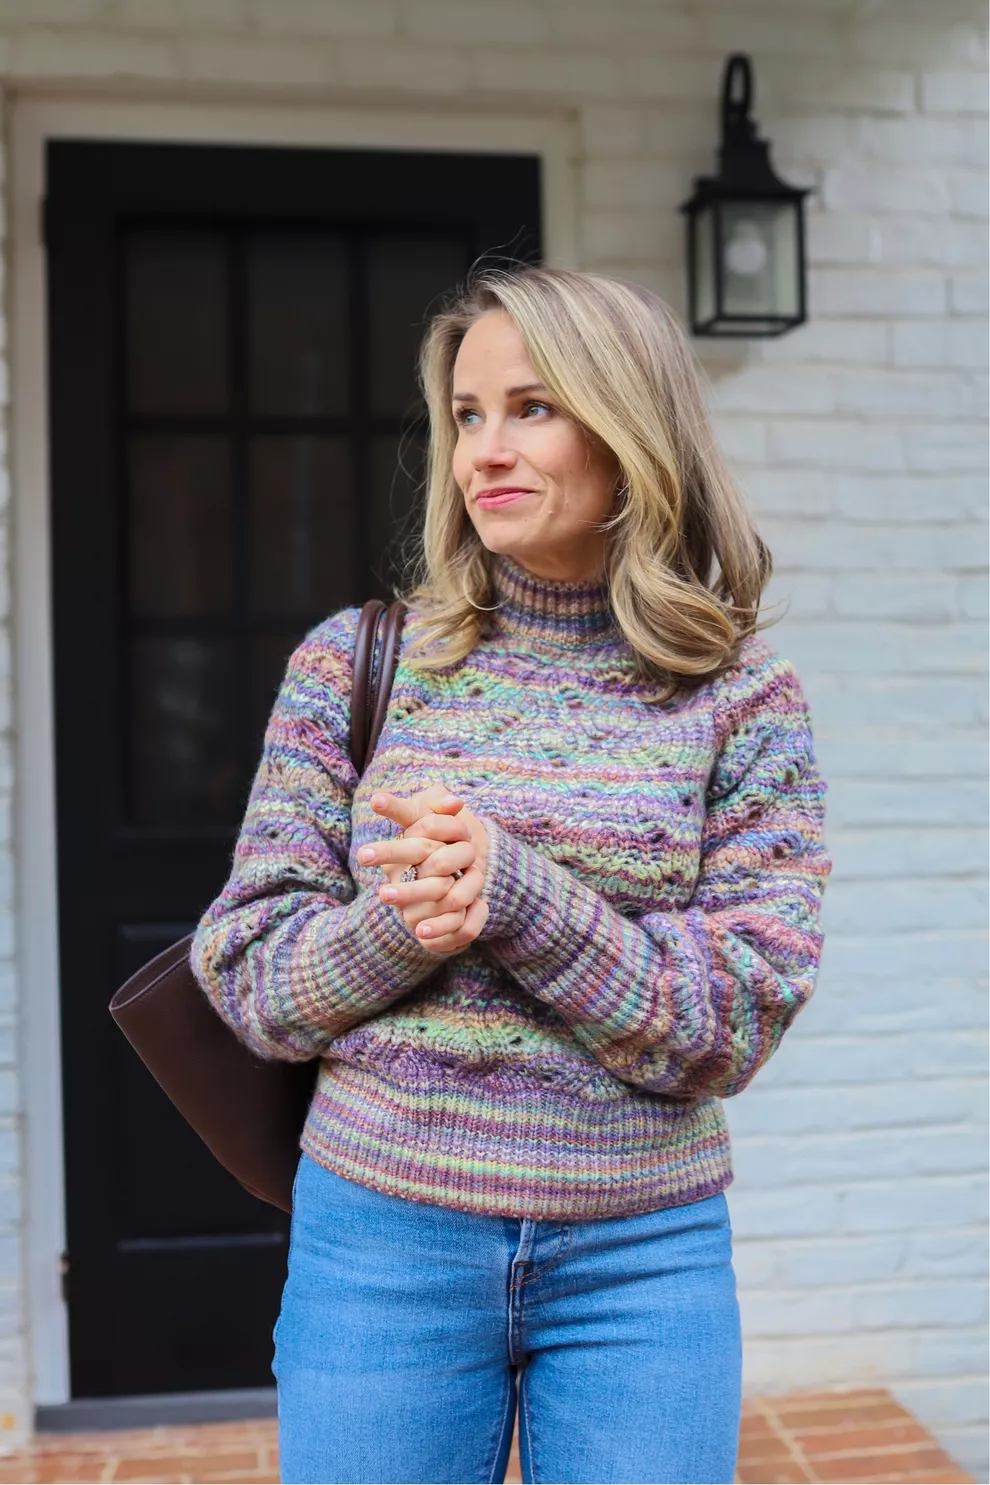 Rainbow Mock Neck Sweater | Amazon Fashion Styles for Her